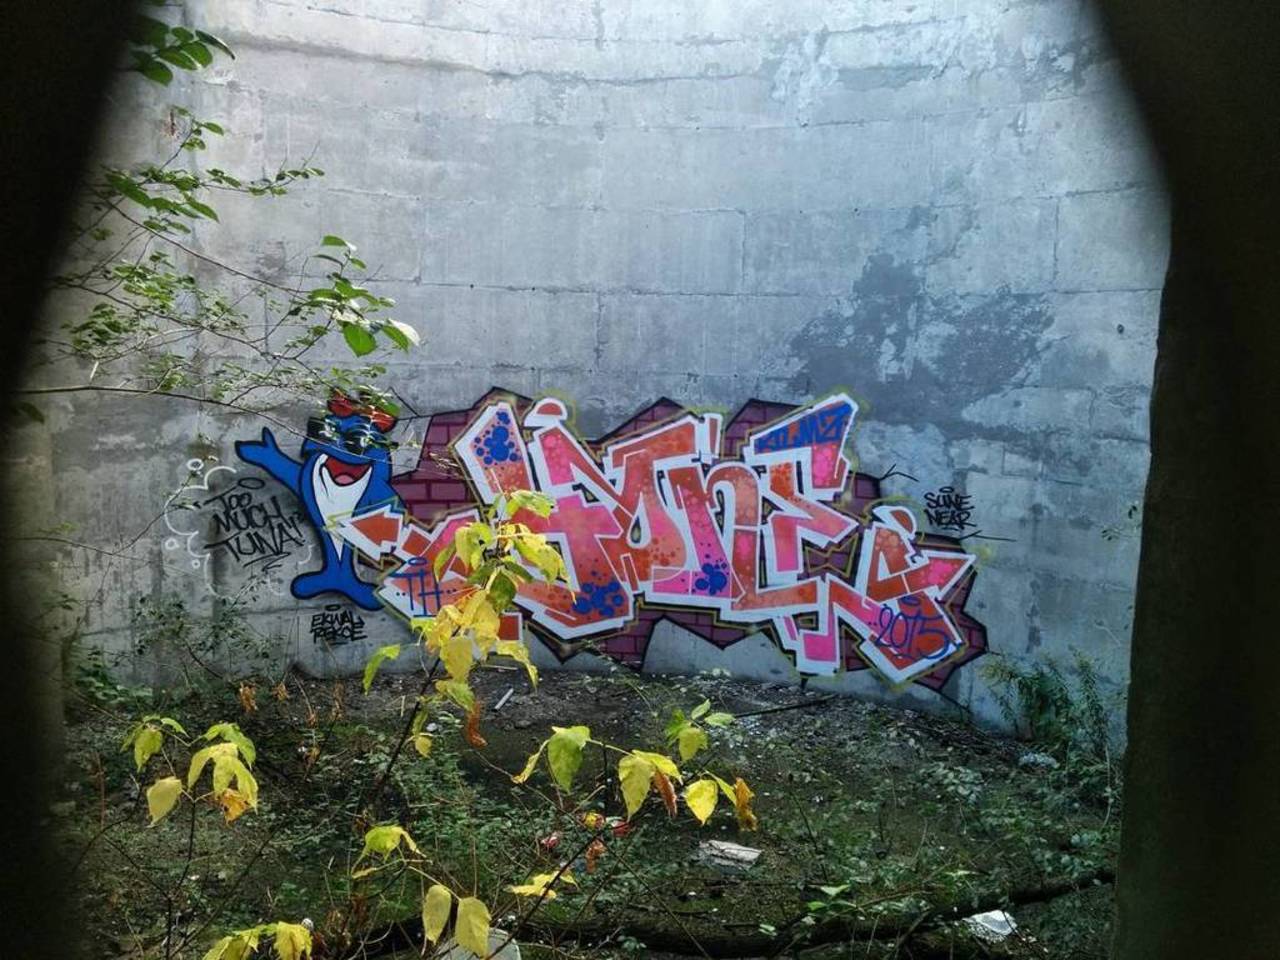 #Toronto #streetart #graffiti #art #tdot #urban #urbanexploration http://ift.tt/1NhSXdX http://t.co/NgtYx7Ckeh